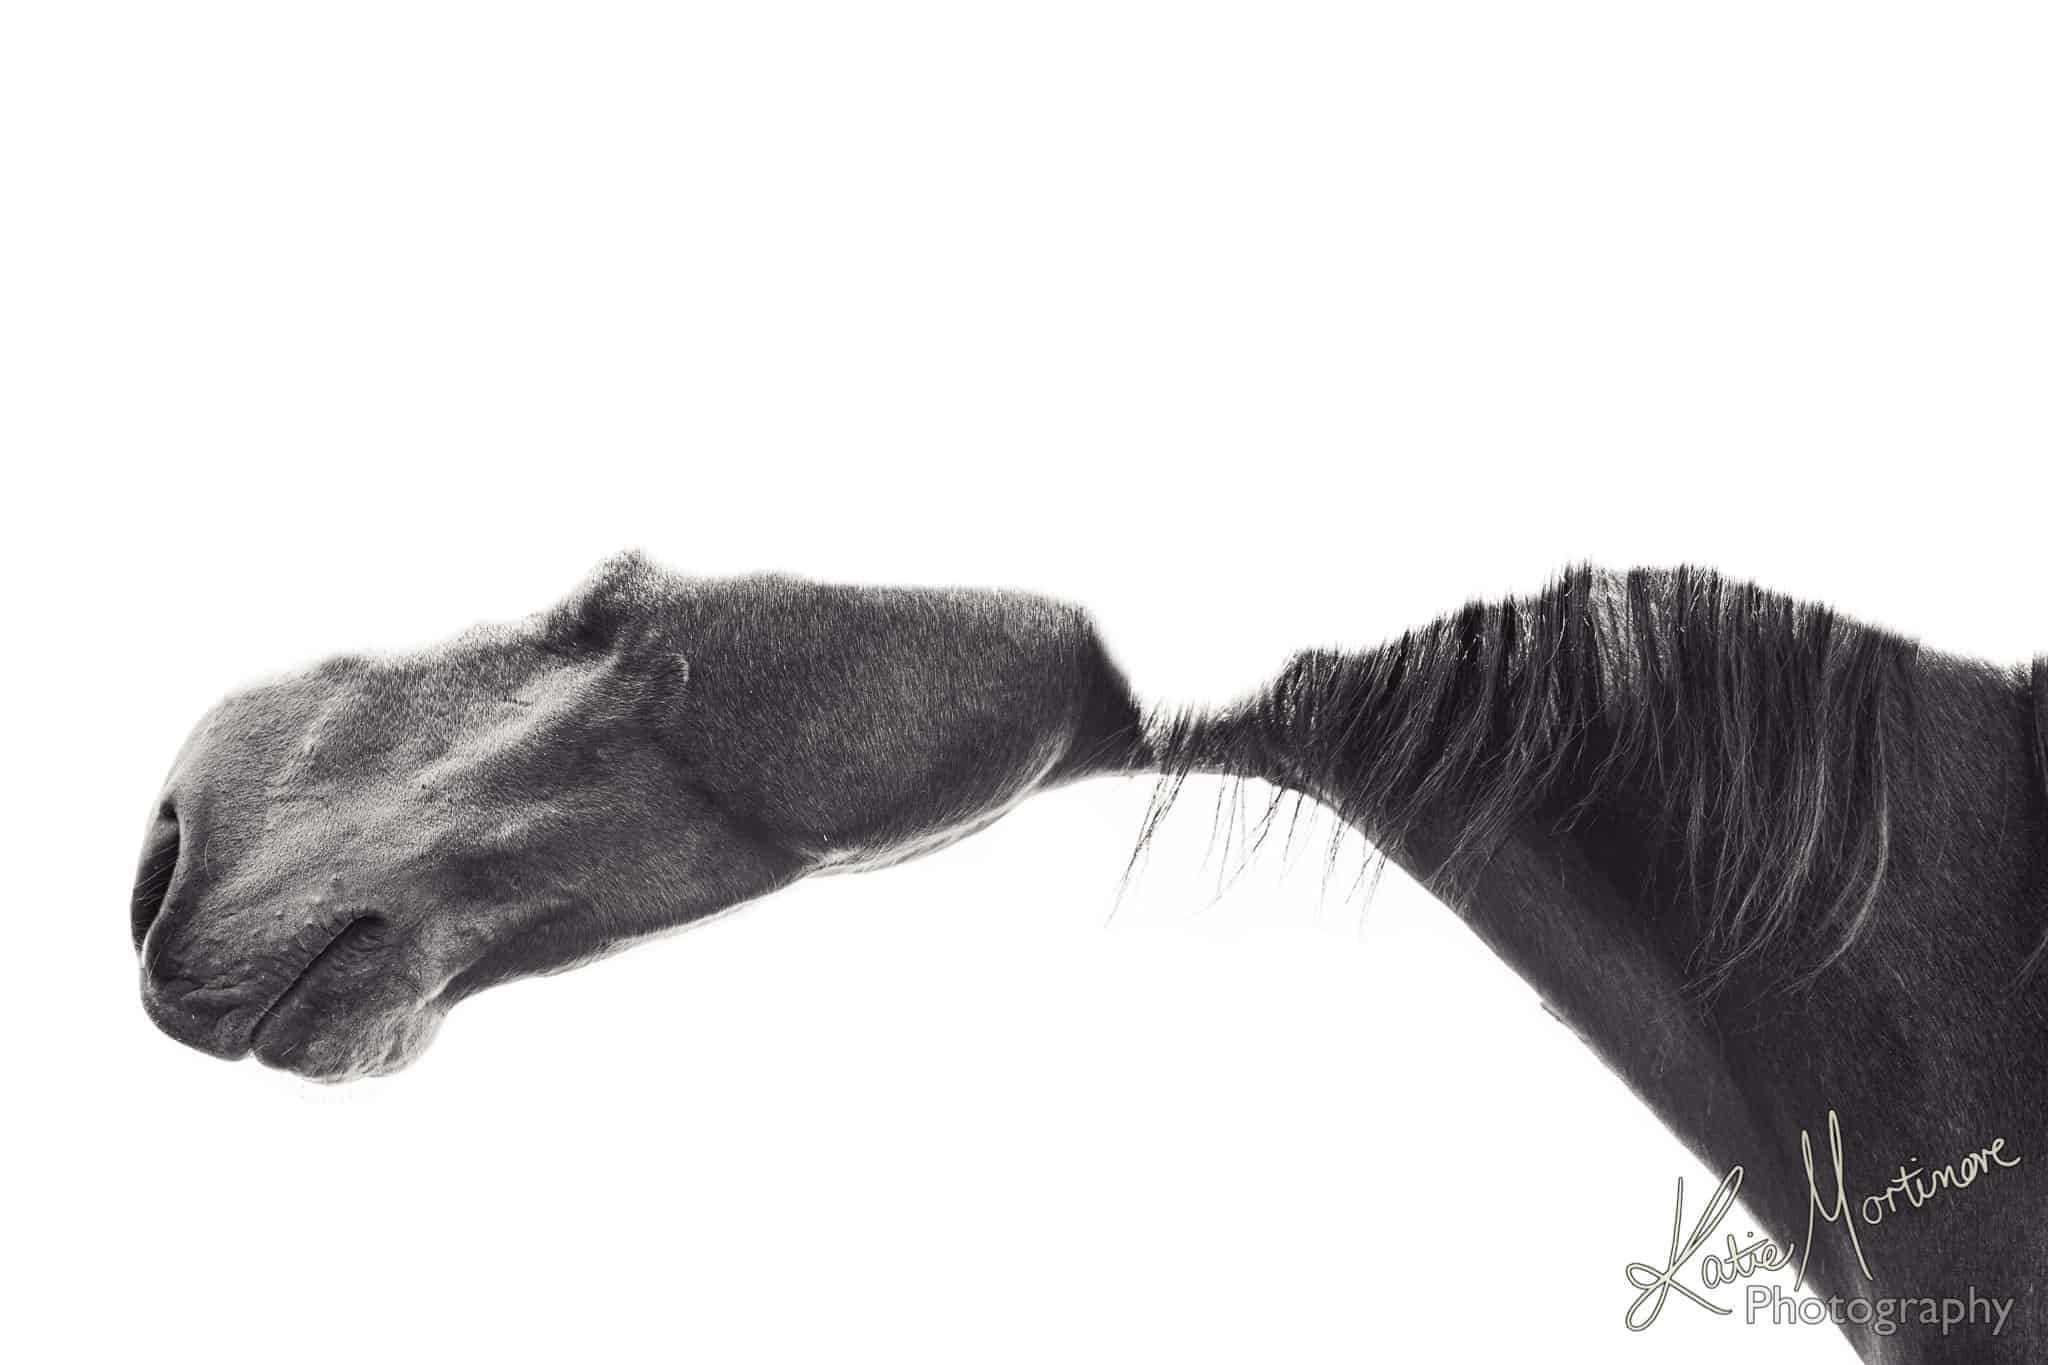 equestrian fine art prints katie mortimore photography